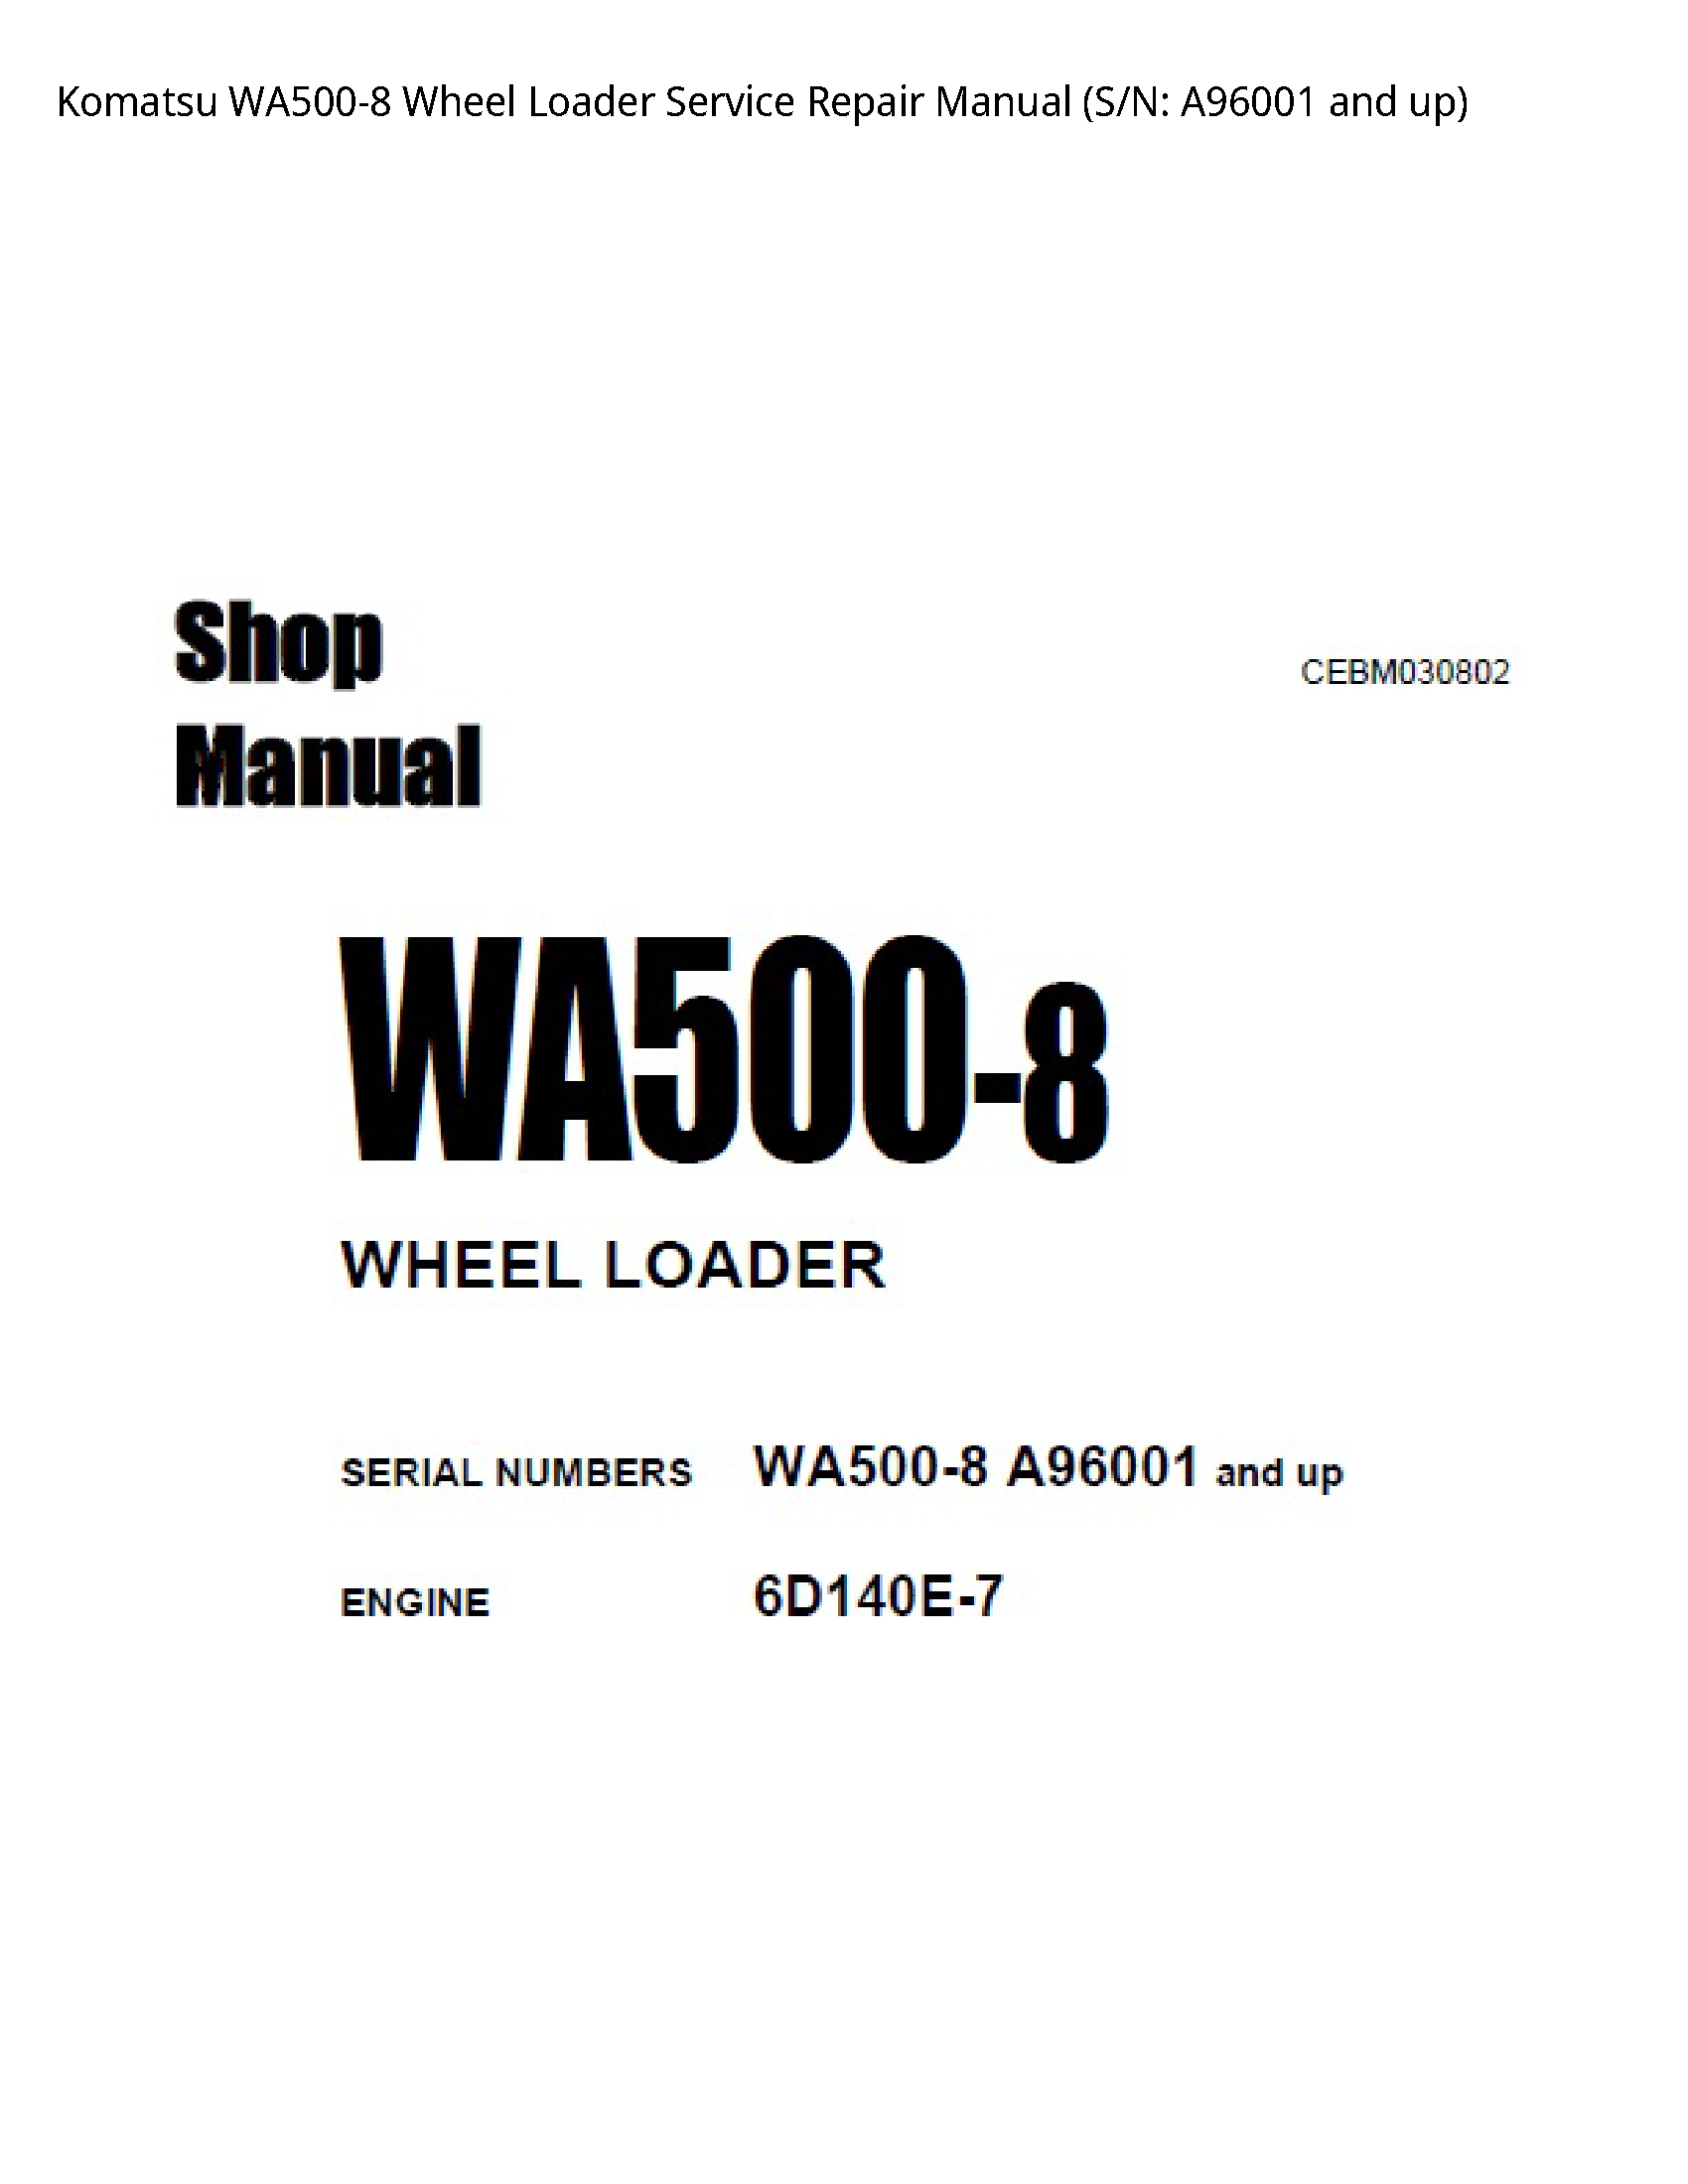 KOMATSU WA500-8 Wheel Loader manual